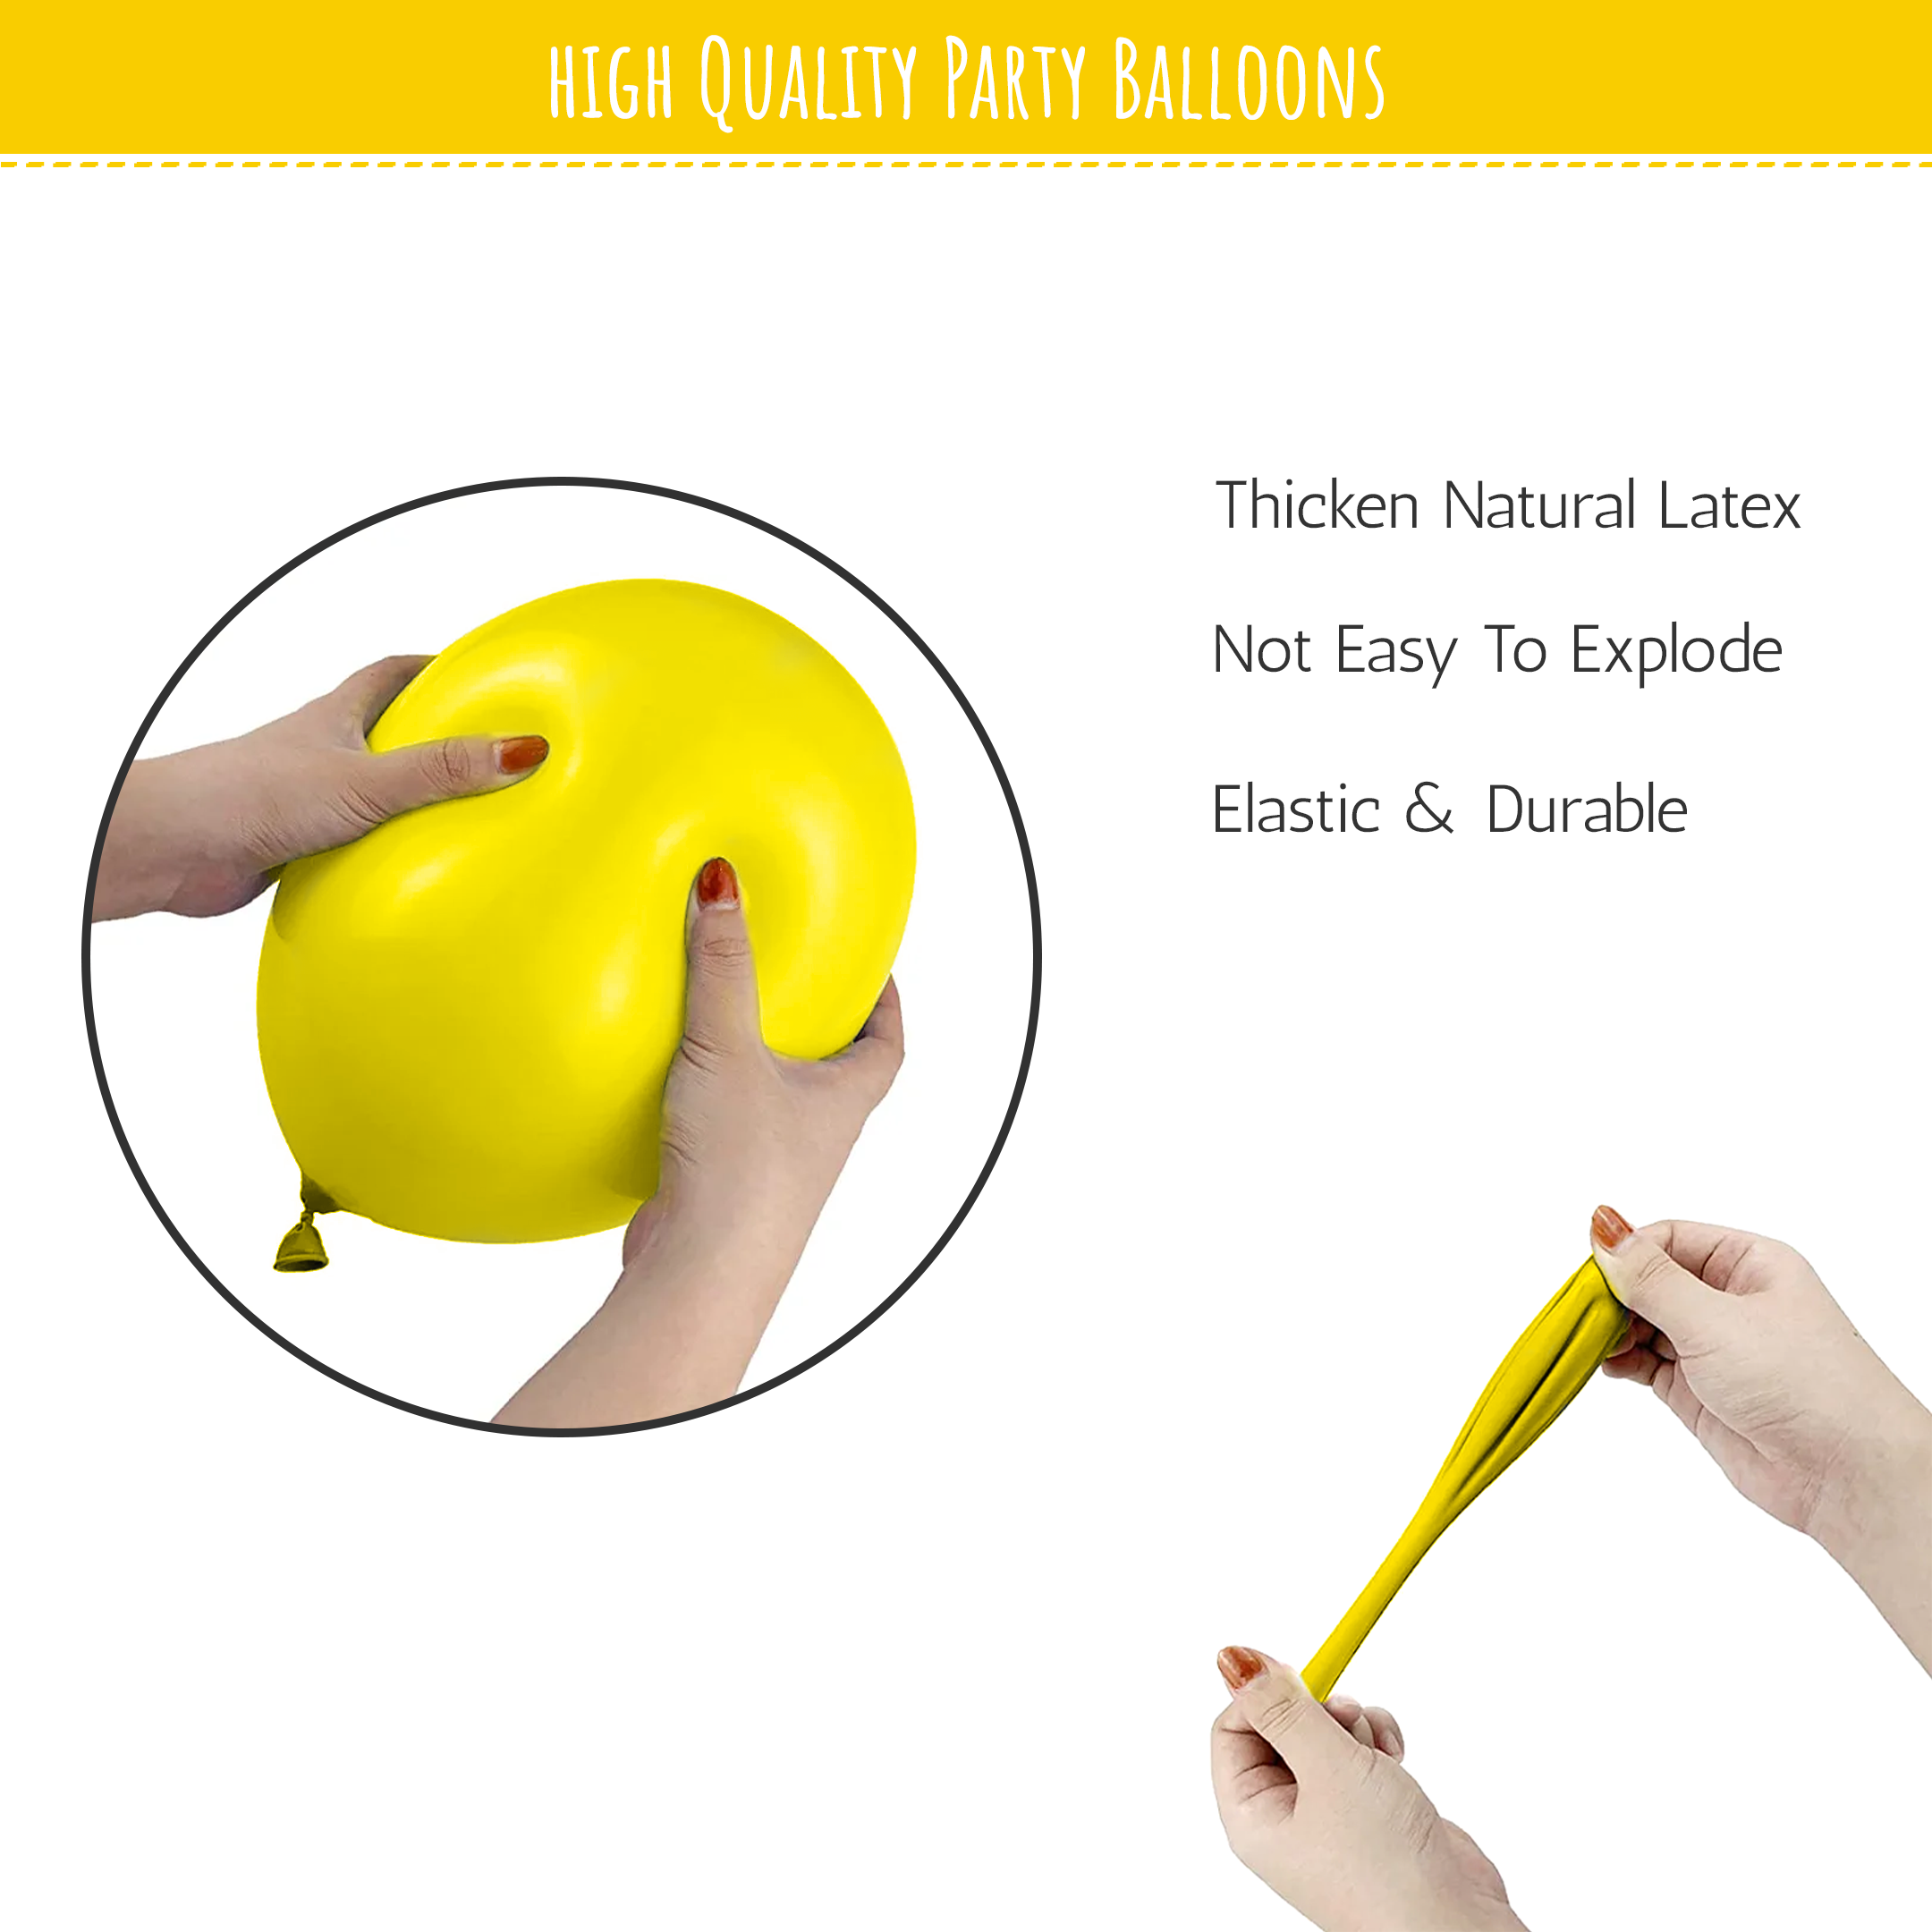 Yellow Metallic balloons for Party decoration-100pcs